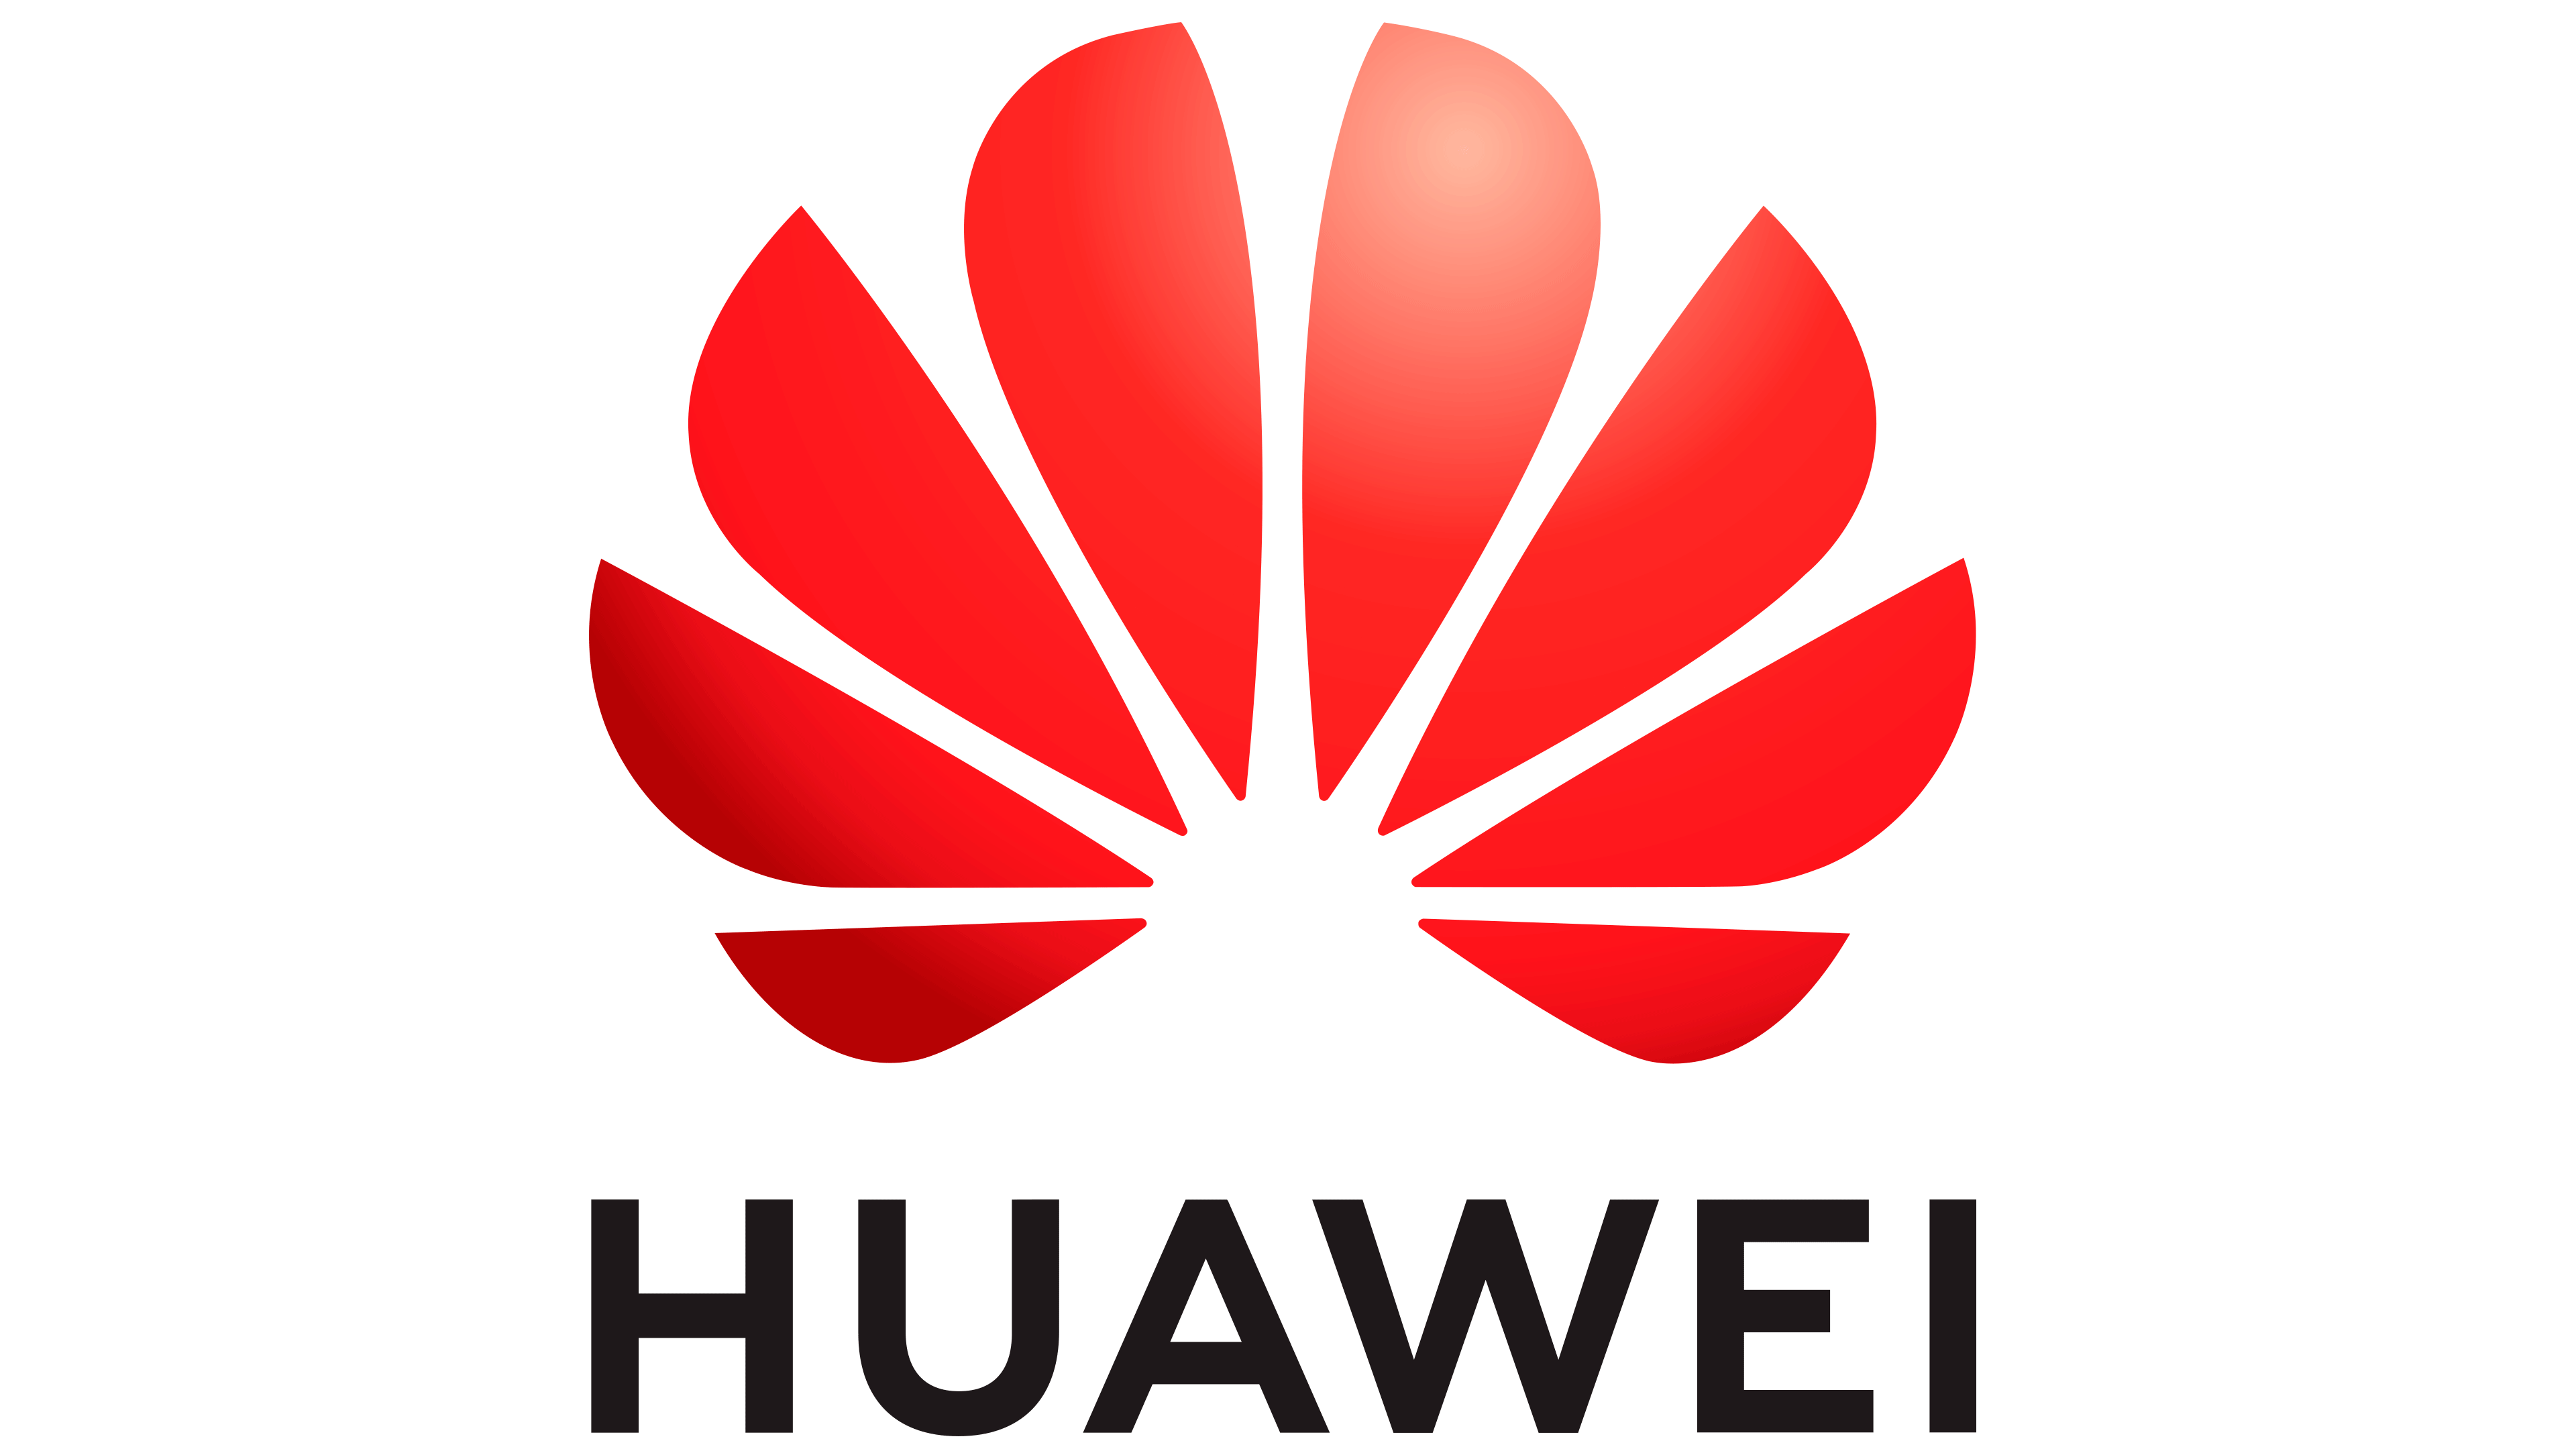 Huawei Logo - LOGOS de MARCAS